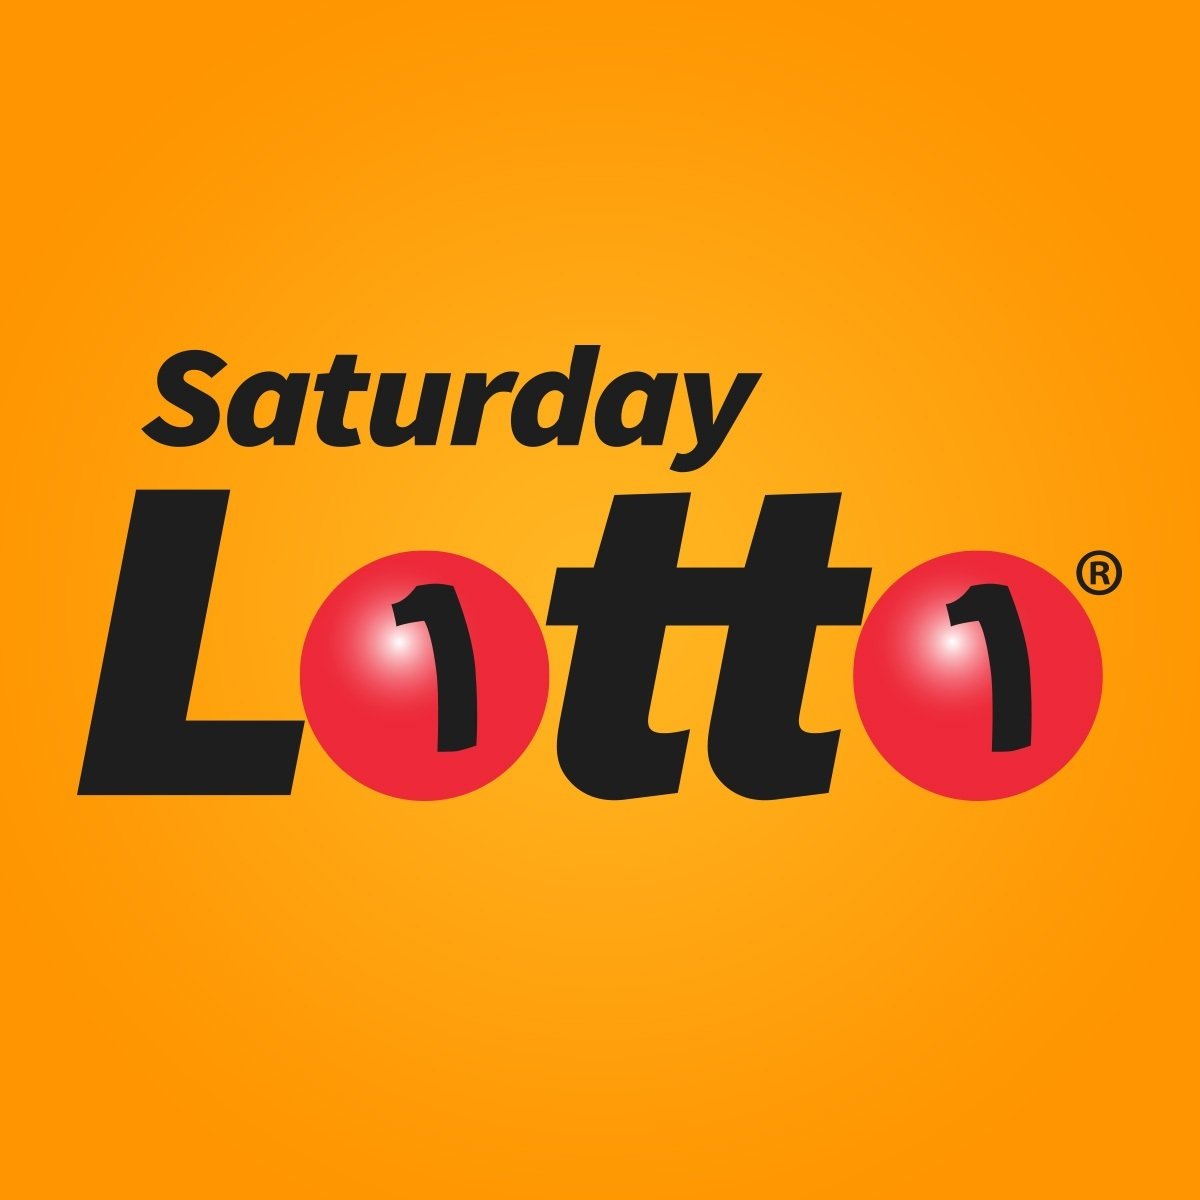 Satuday Lotto